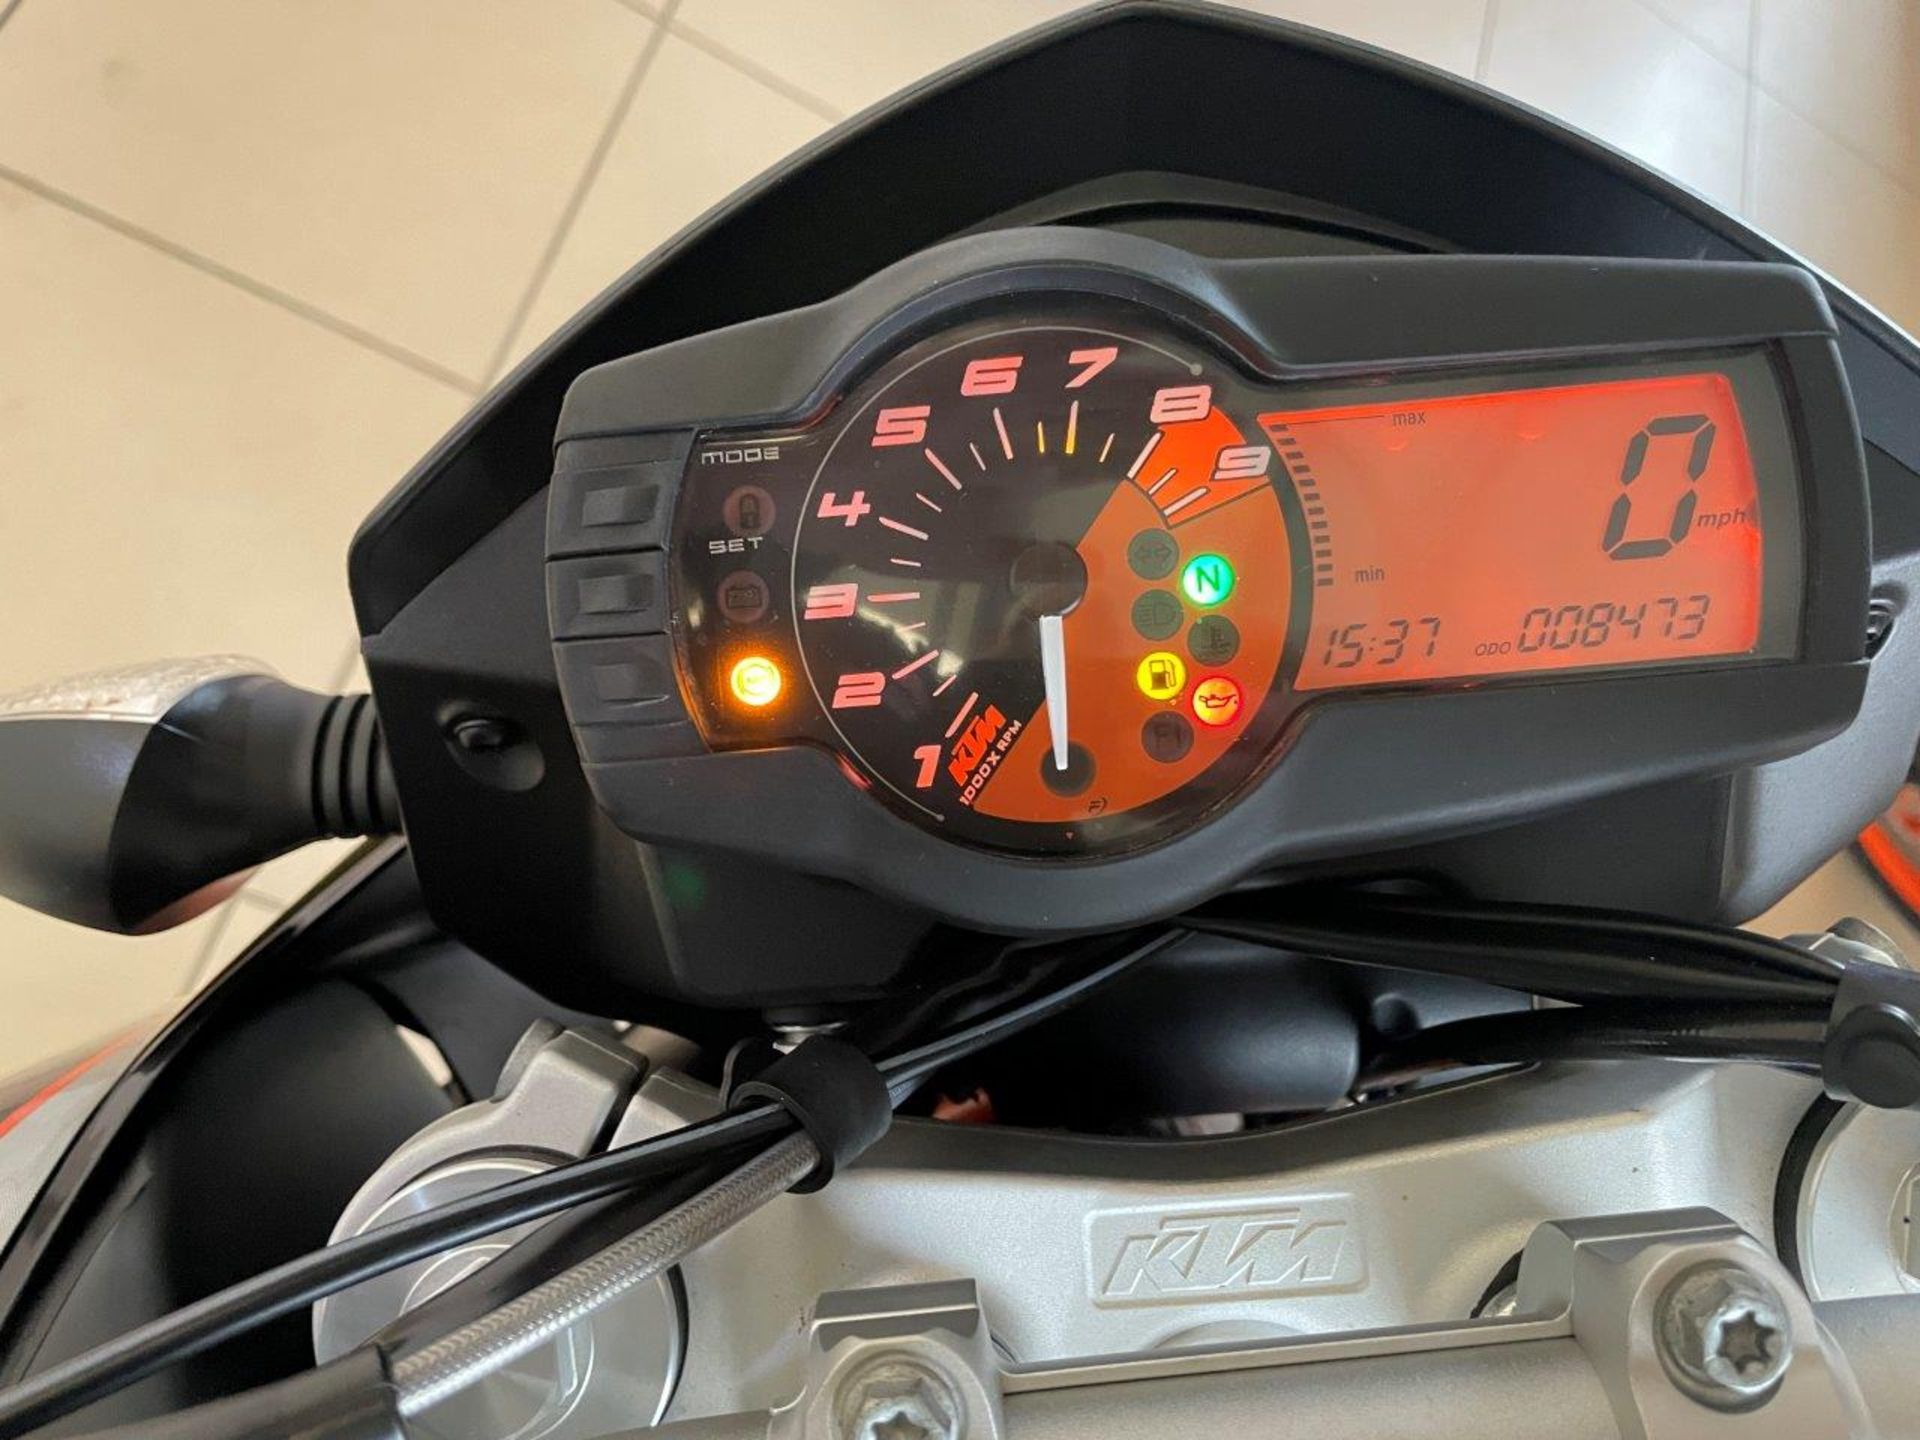 KTM Duke 690 Motorbike (May 2015) - Image 15 of 18